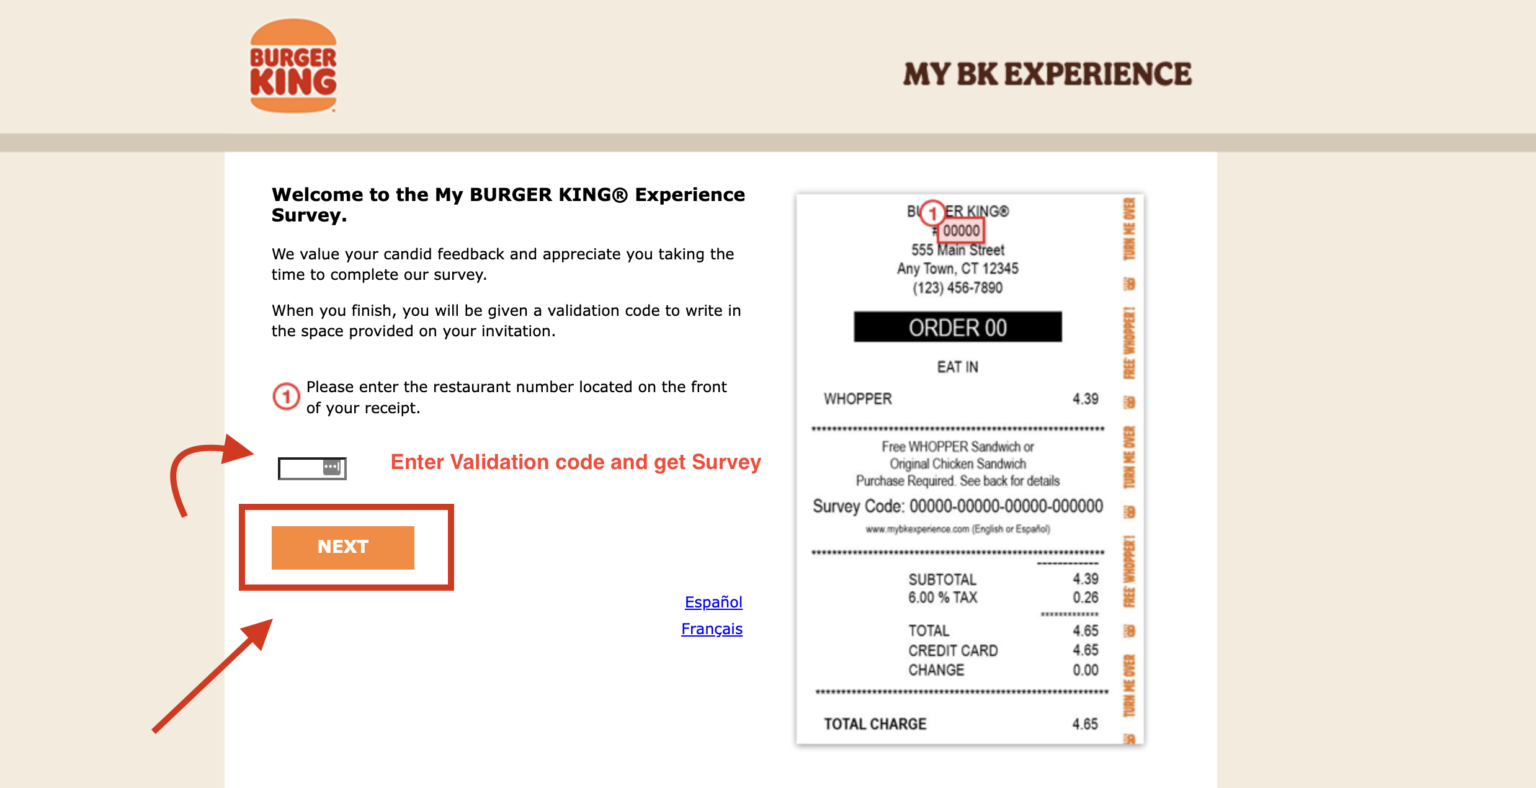 MyBKExperience – Official Burger King Survey at mybkexperience.com